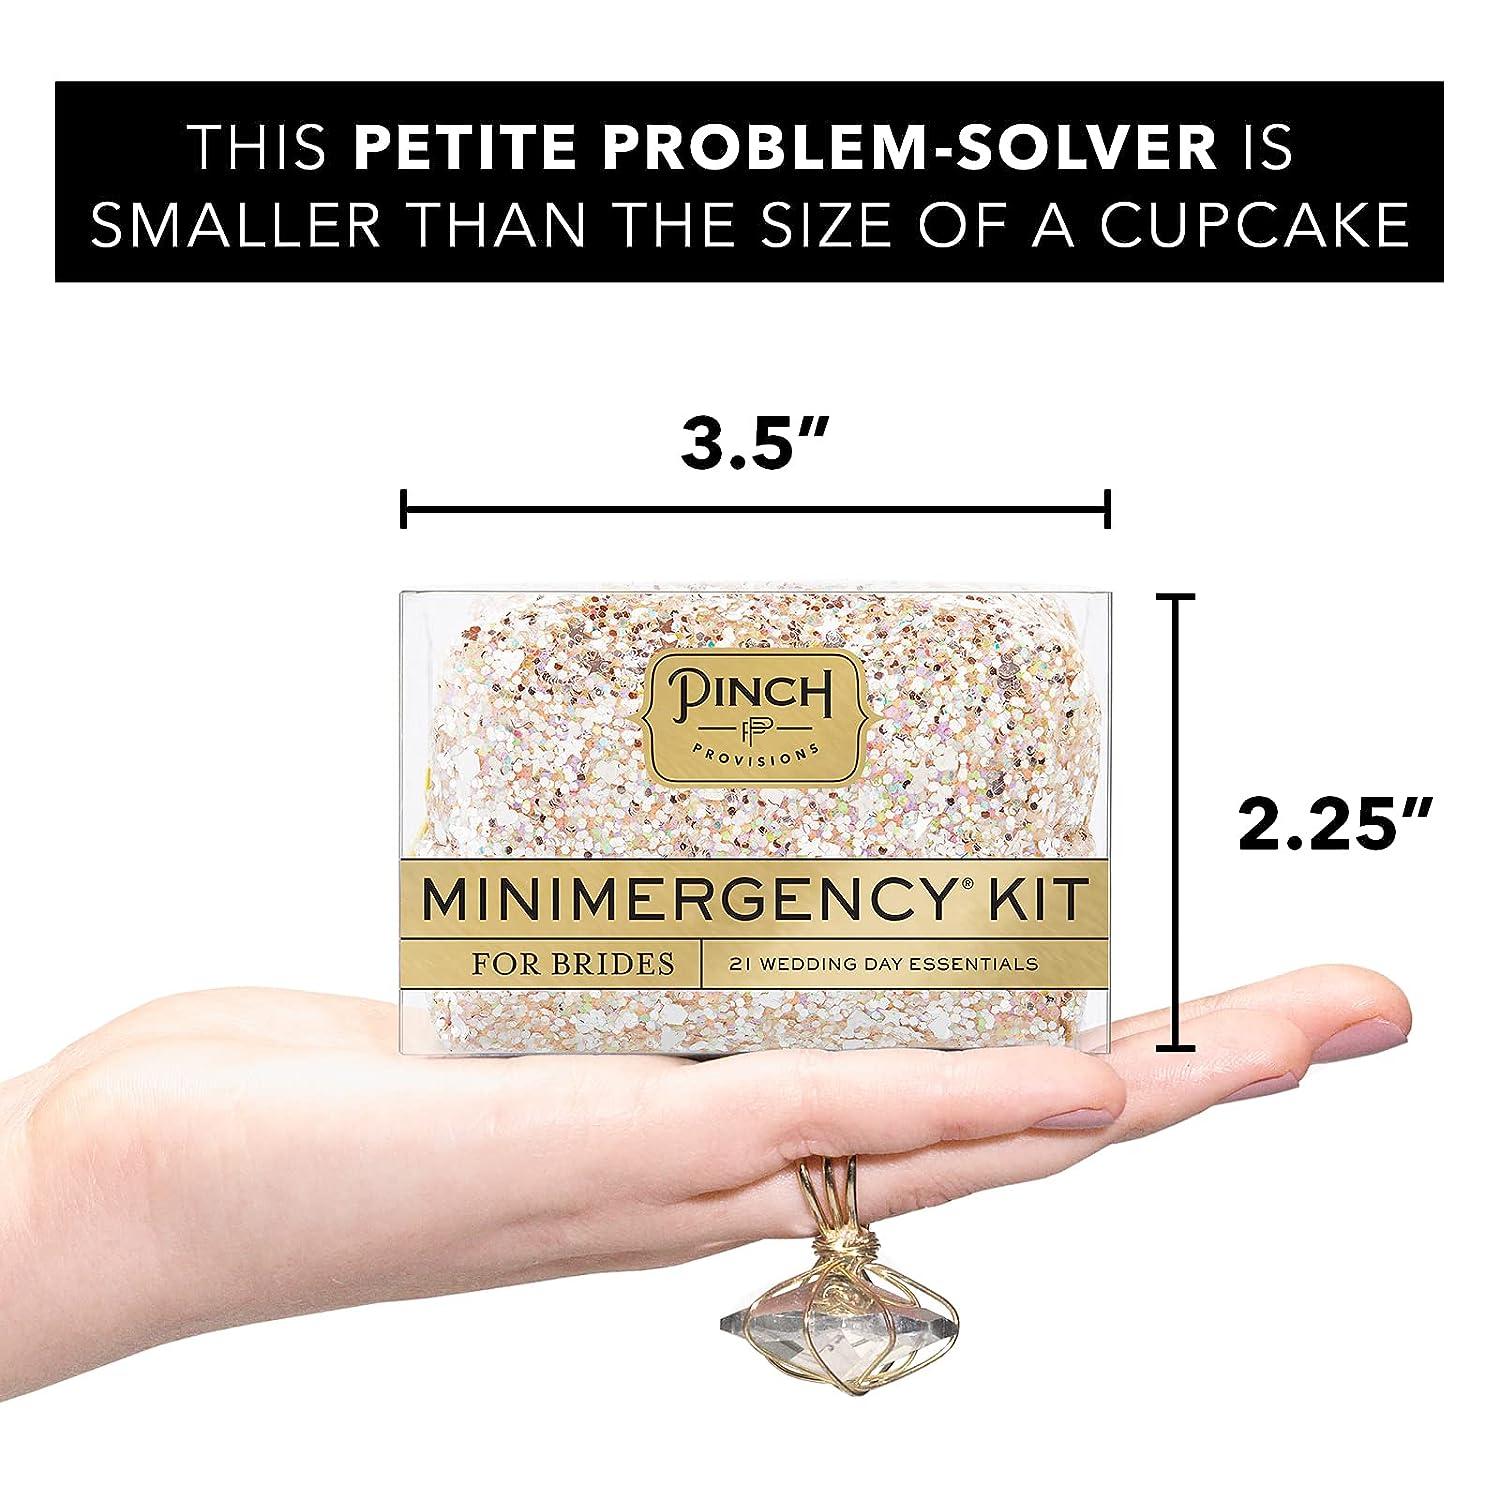 Pinch Provisions - Mini Emergency Kit